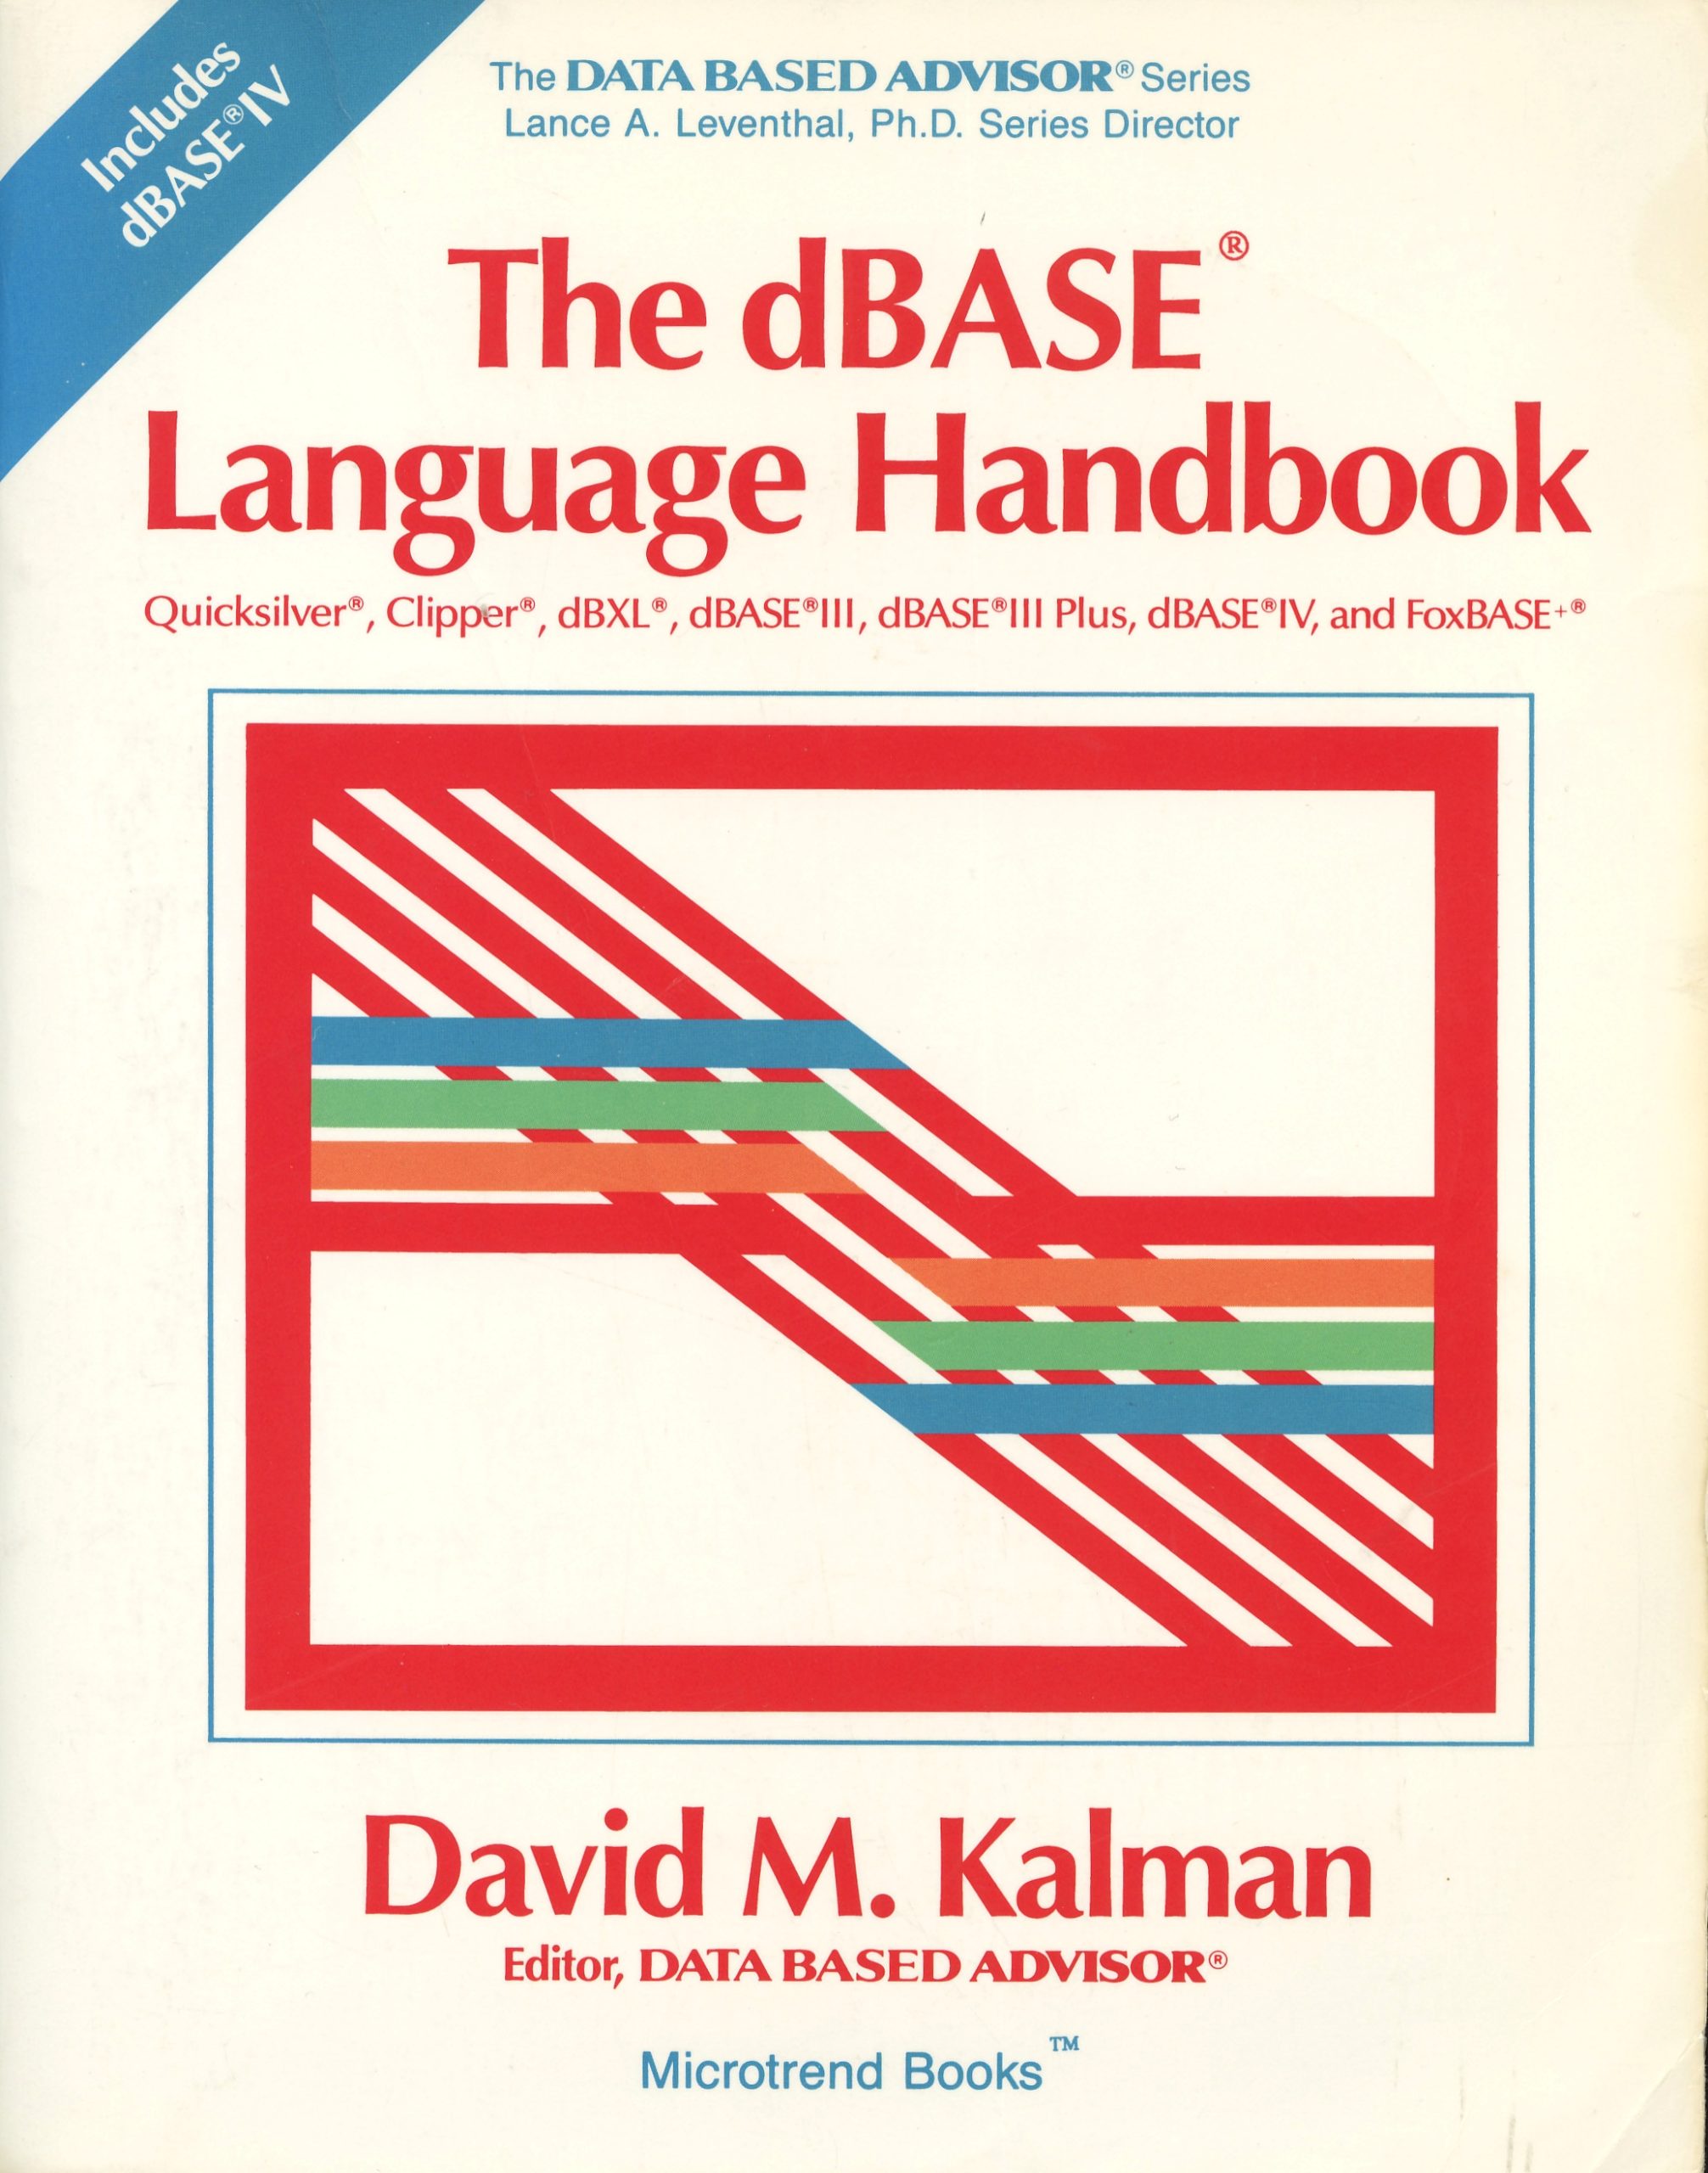 The dBASE Language Handbook by David M. Kalman